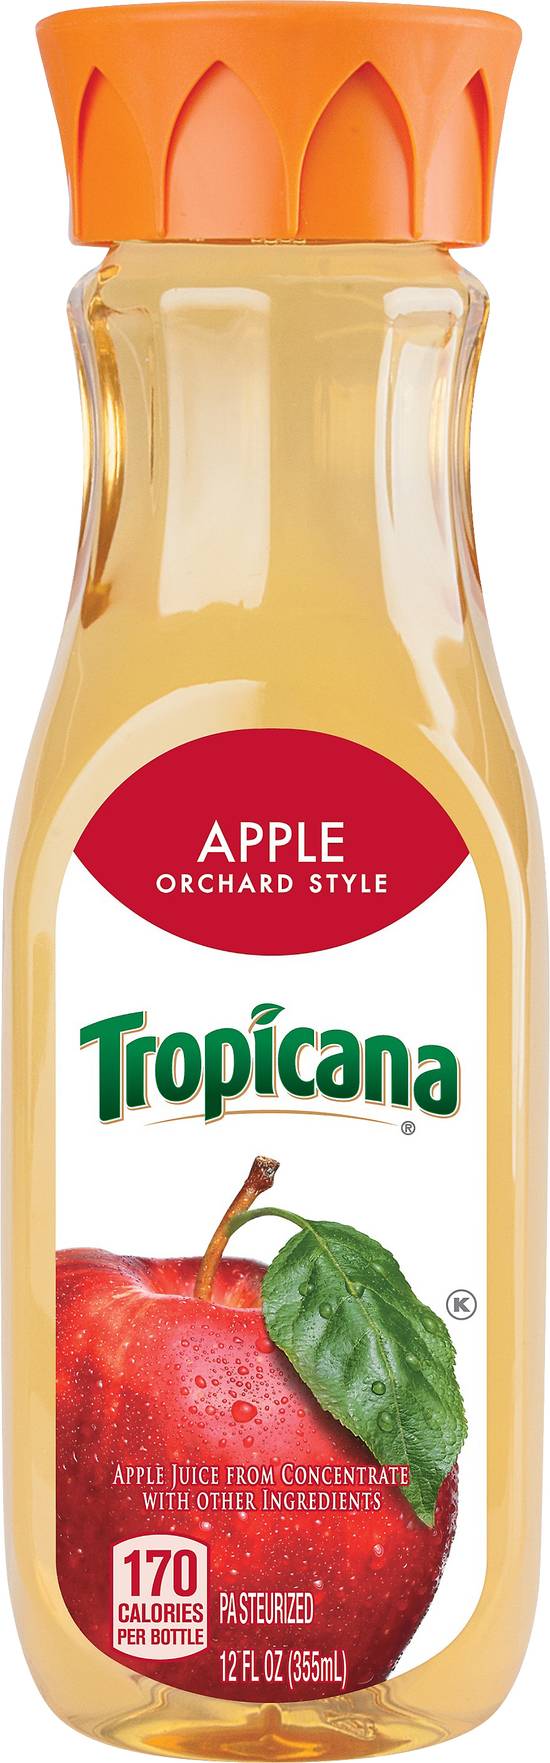 Tropicana Orchard Style Apple Juice (12 fl oz)